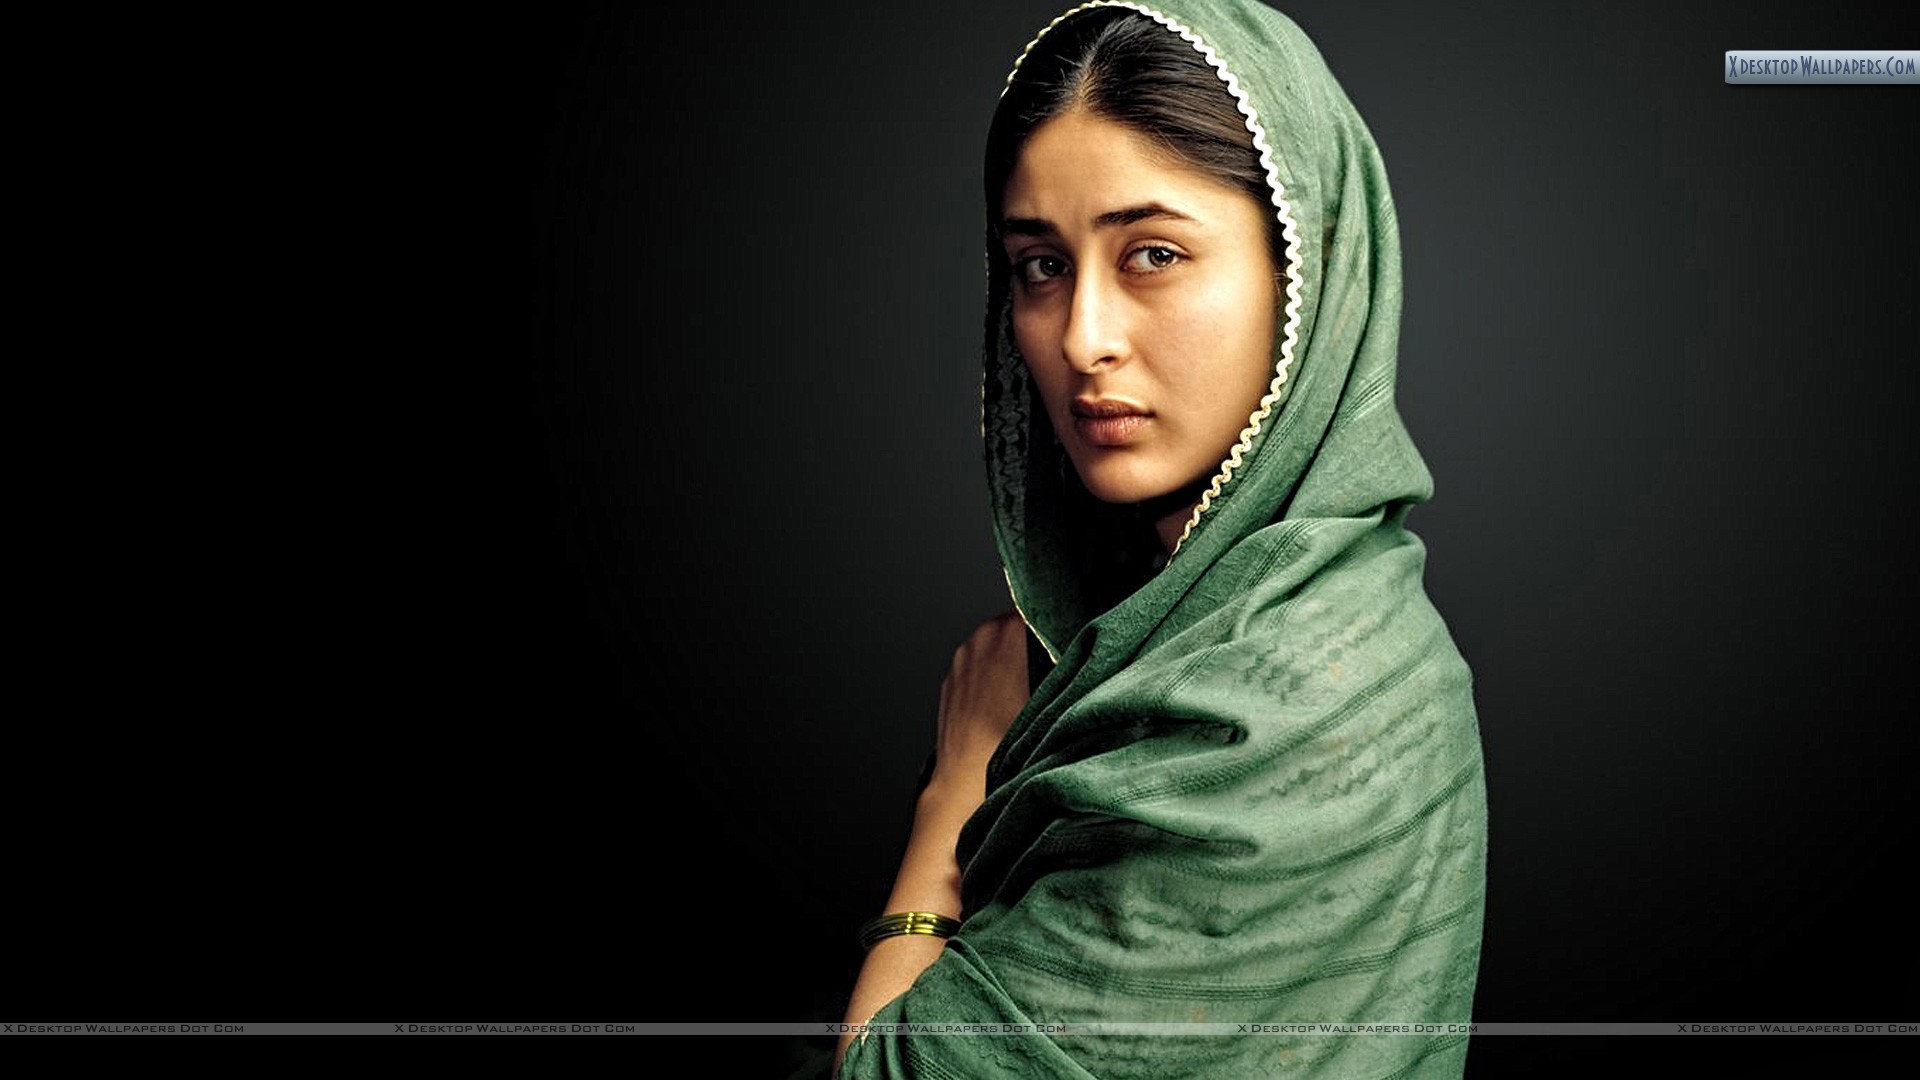 Kareena Kapoor Sade Face In Green Dress Wallpaper